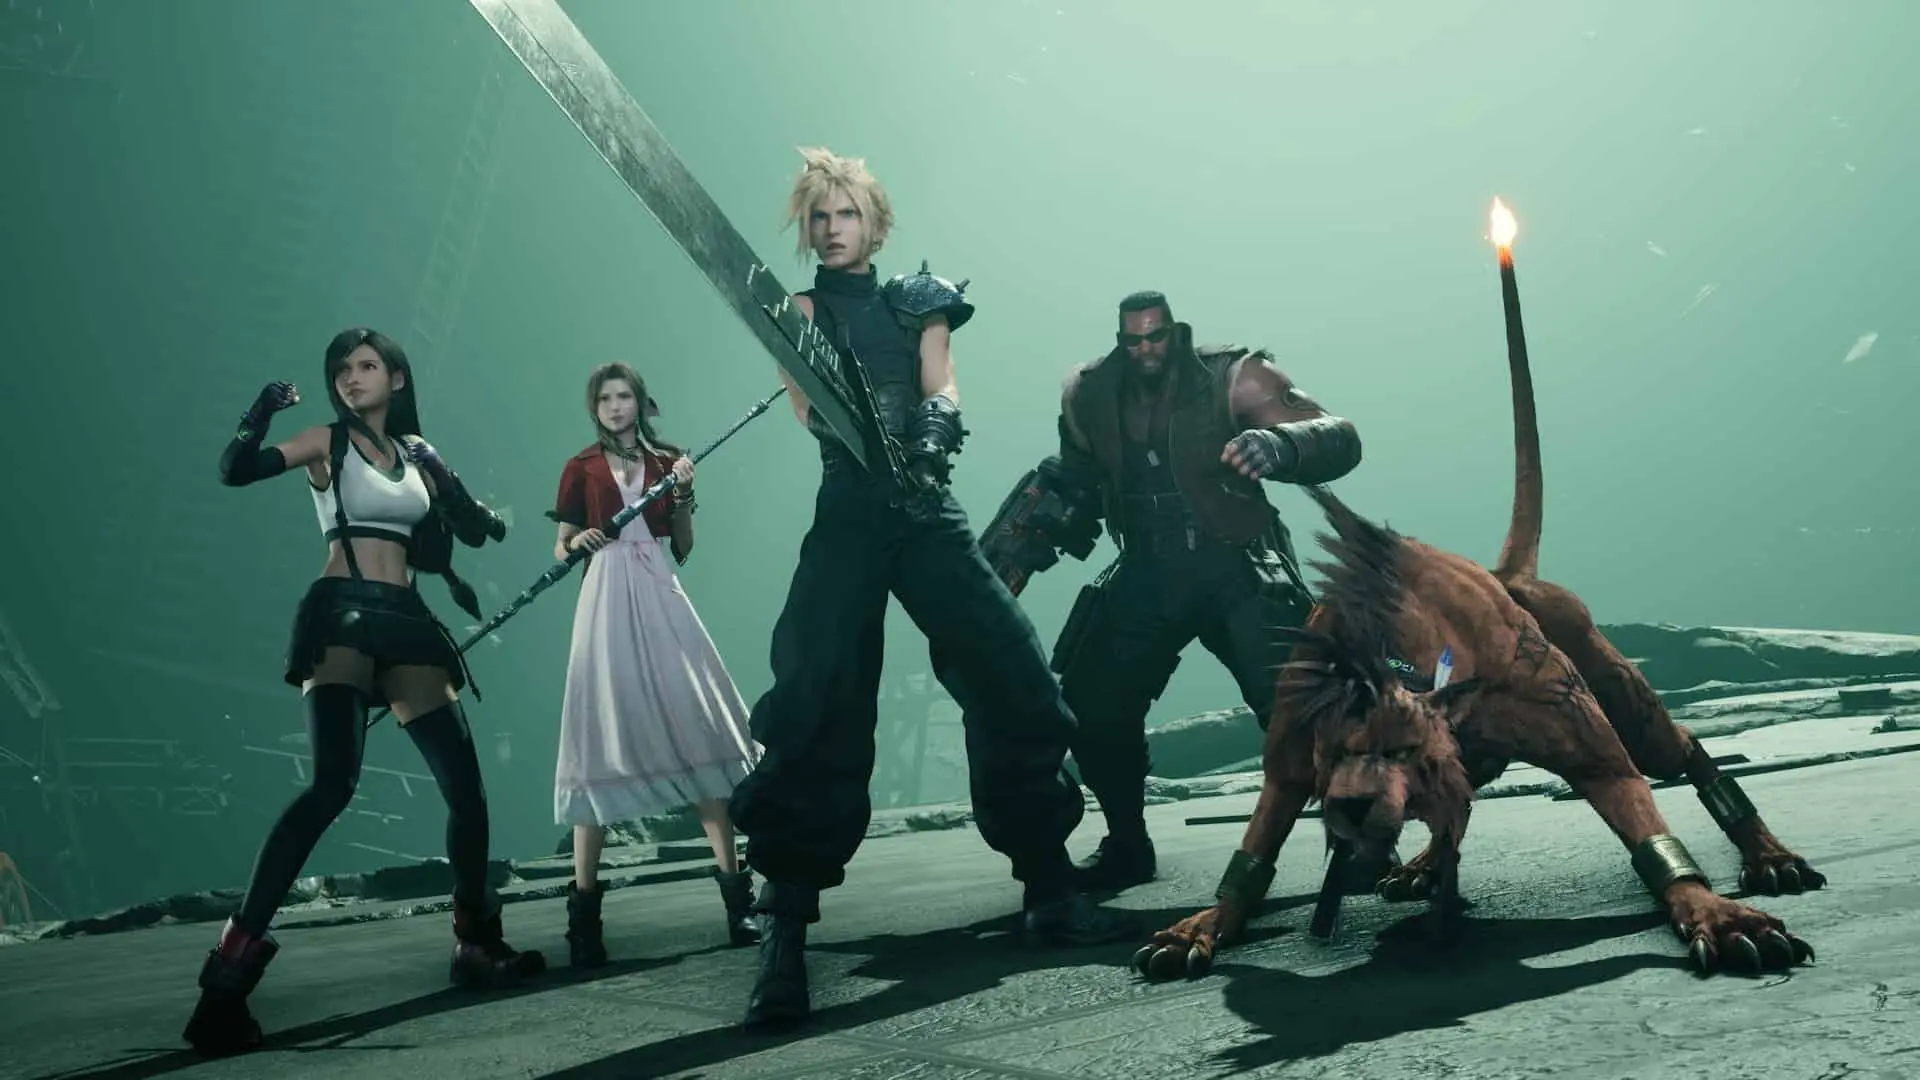 Final Fantasy VII Rebirth